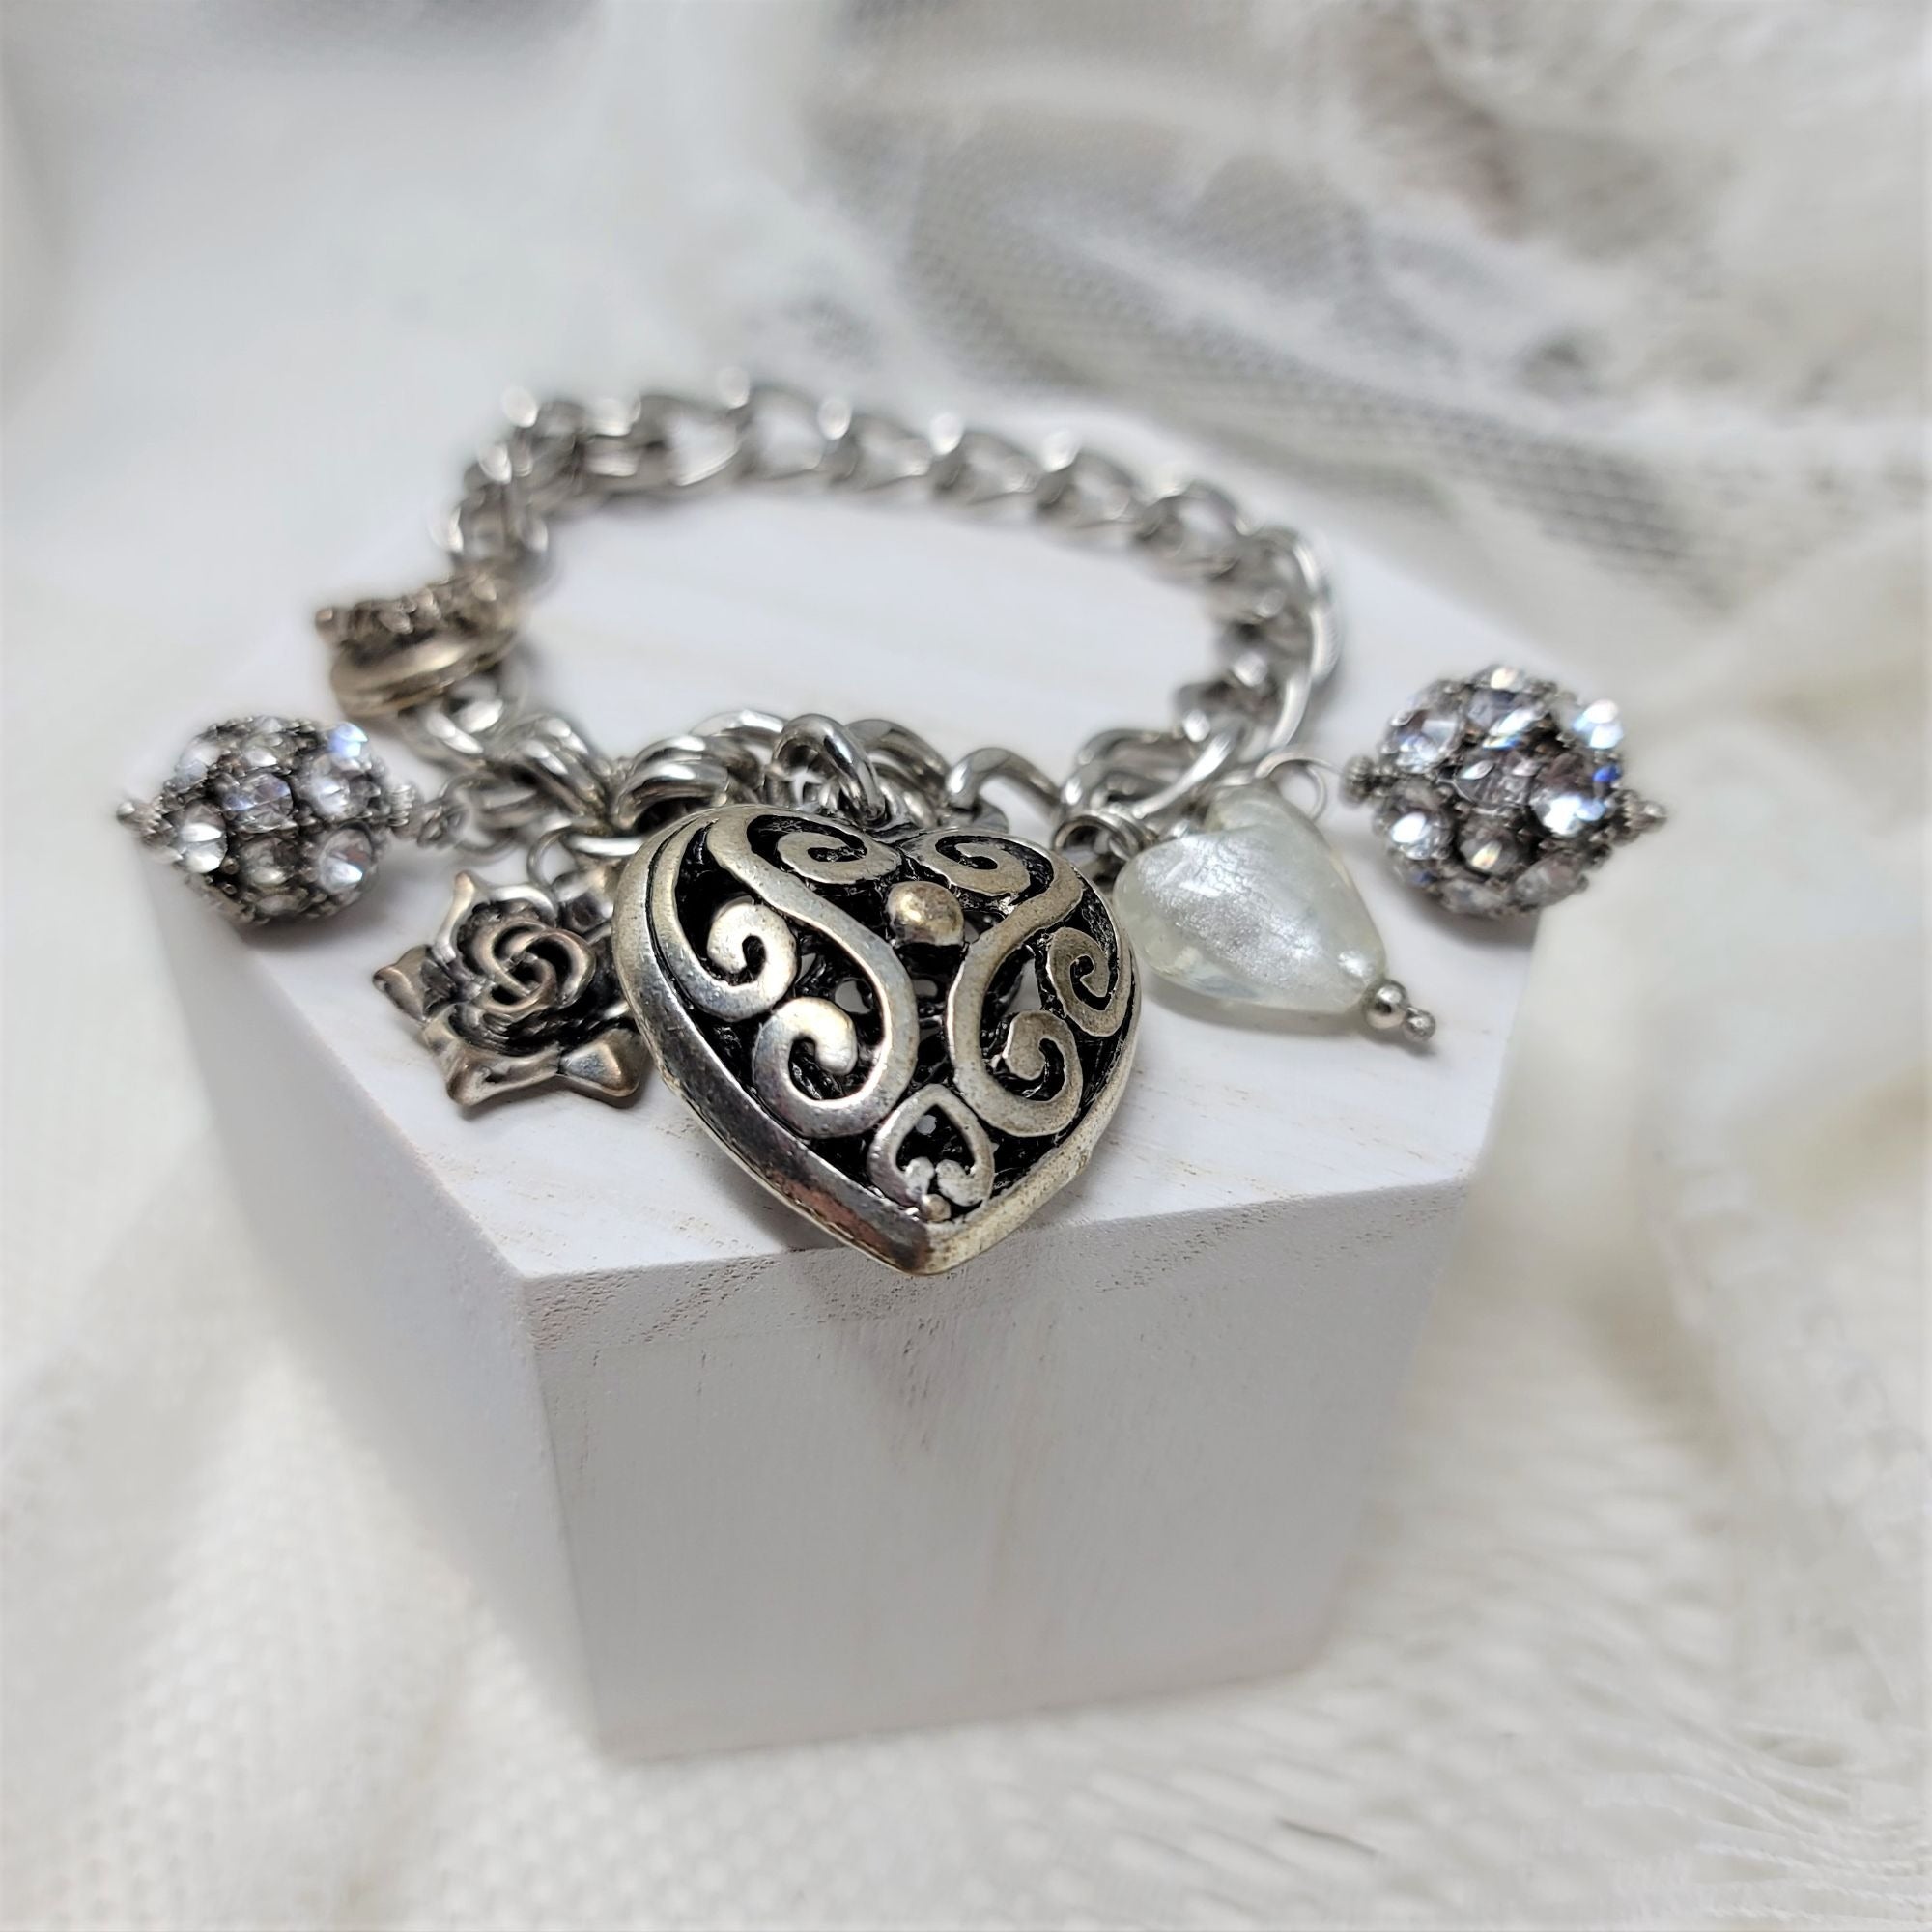 Love this Silver Charm Bracelet Flowers Hearts Rhinestones